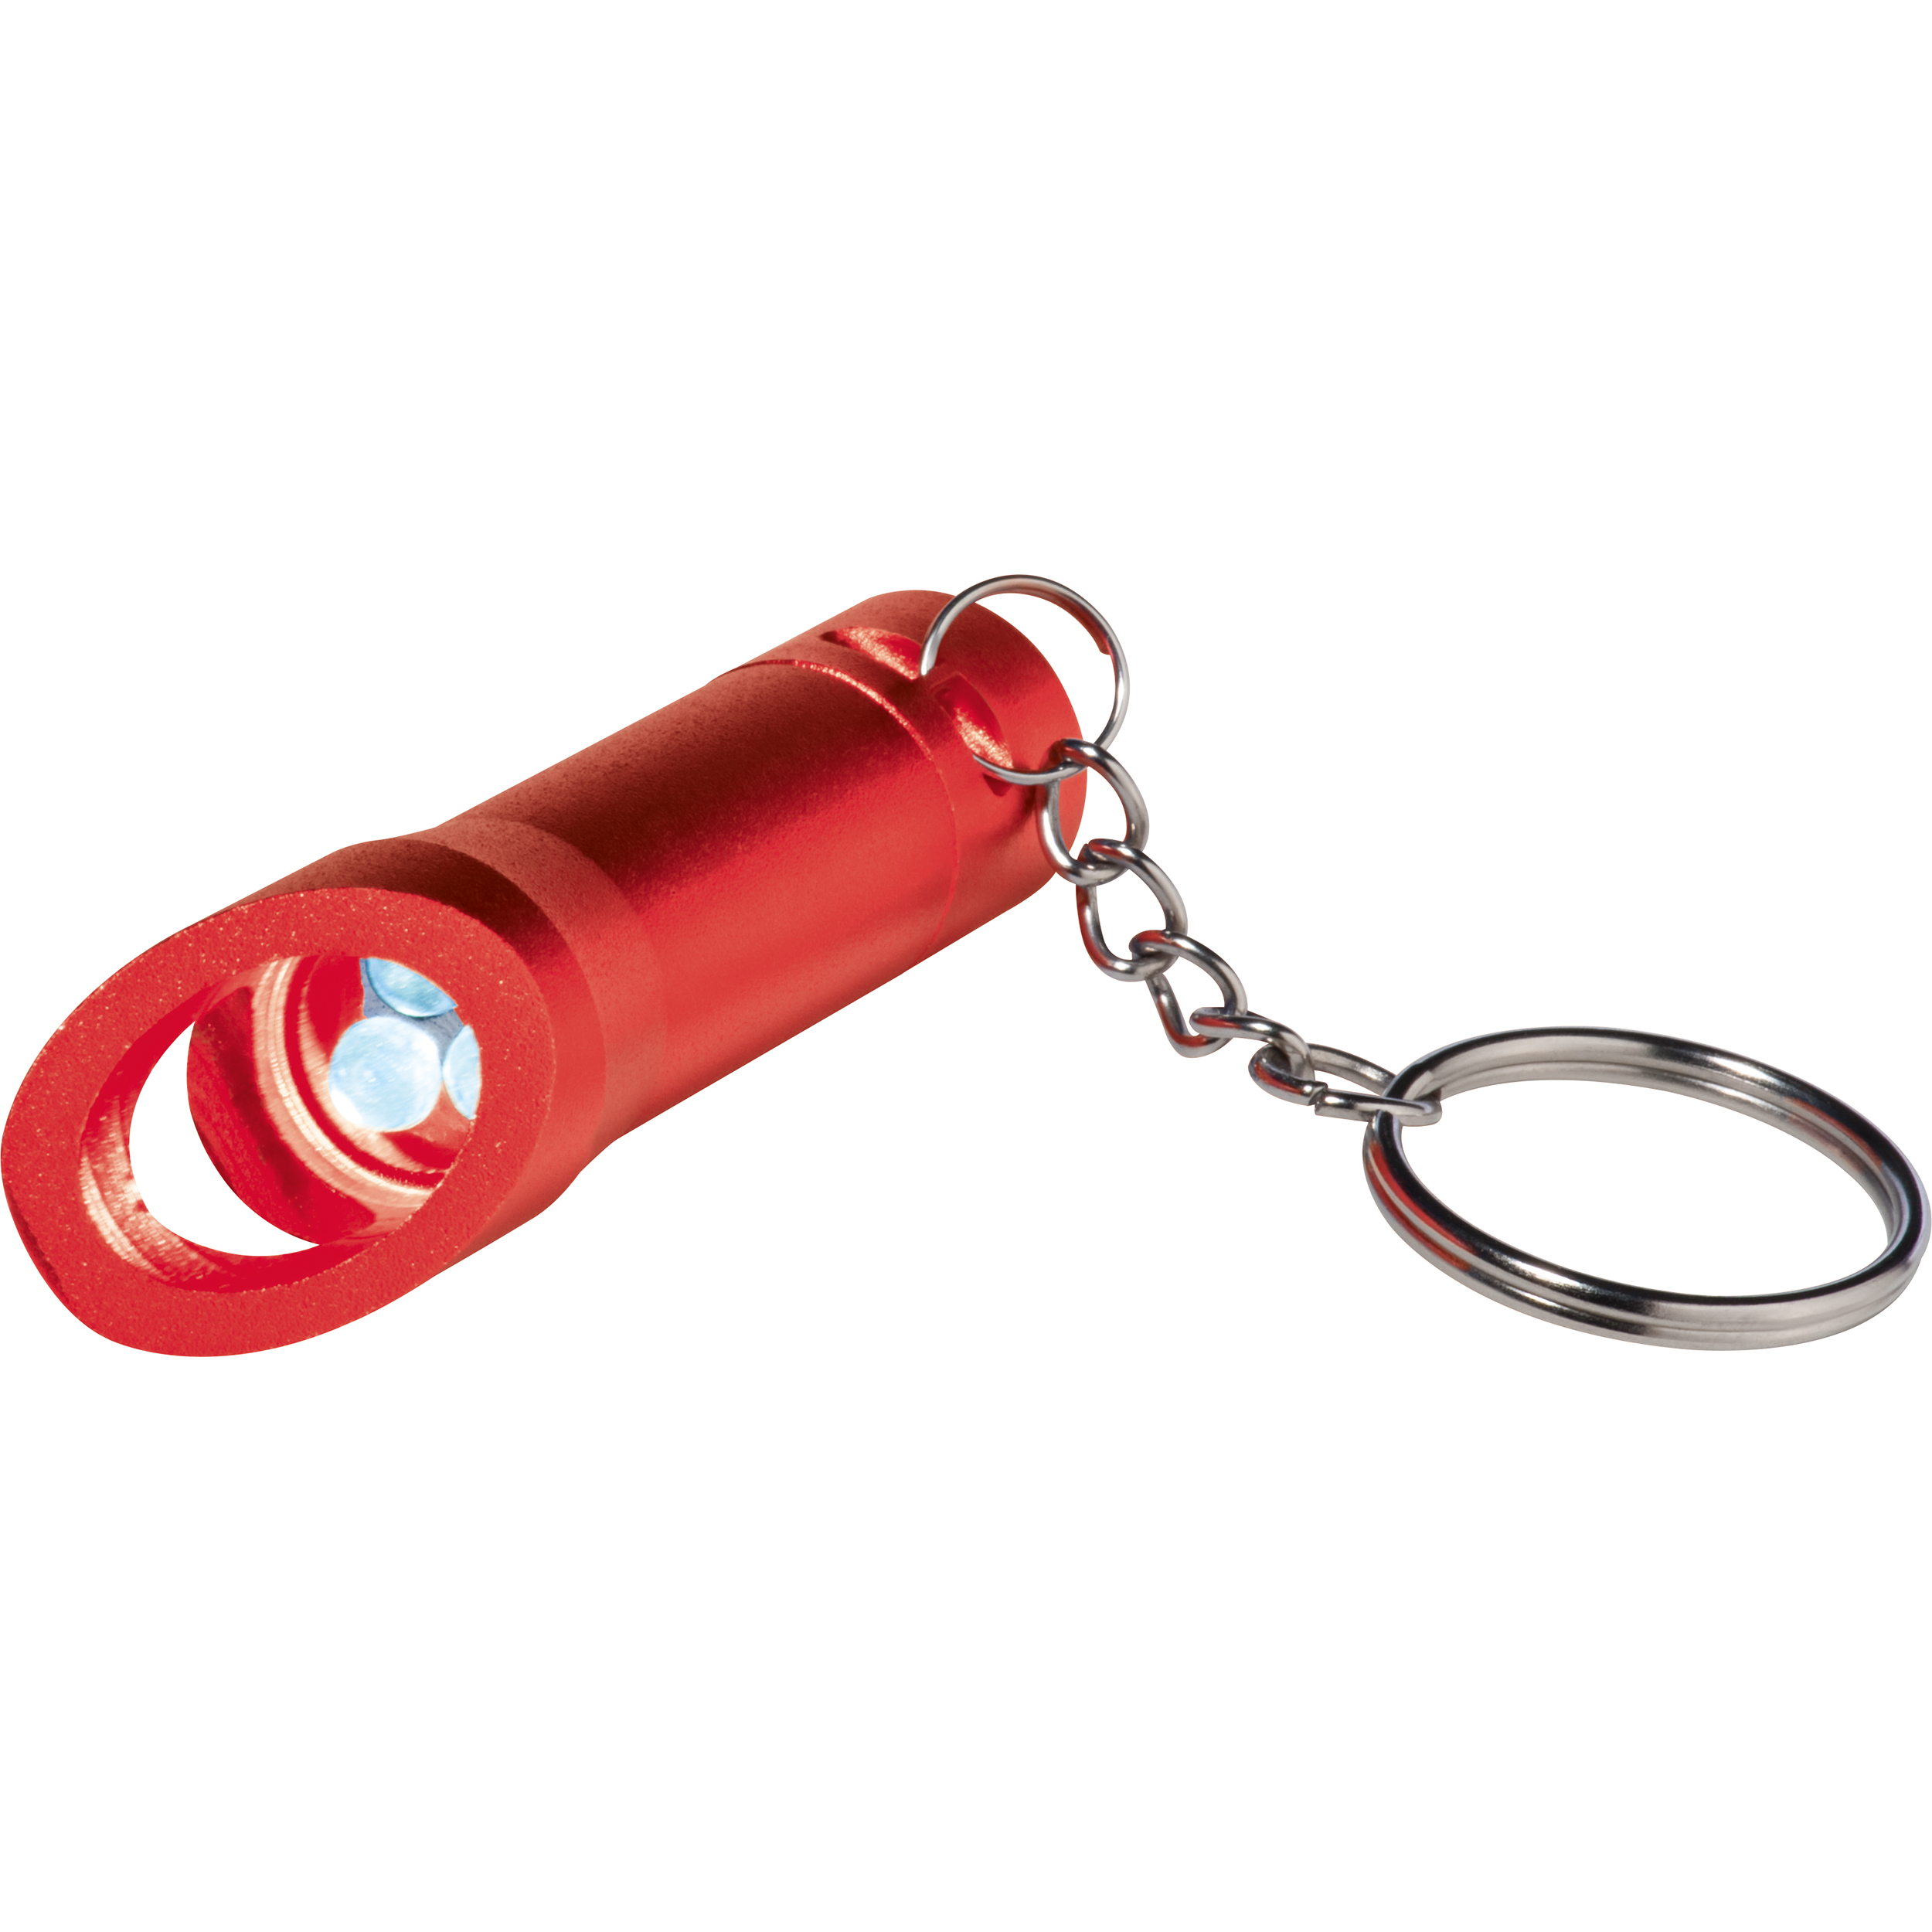 LED key ring with metal bottle opener.